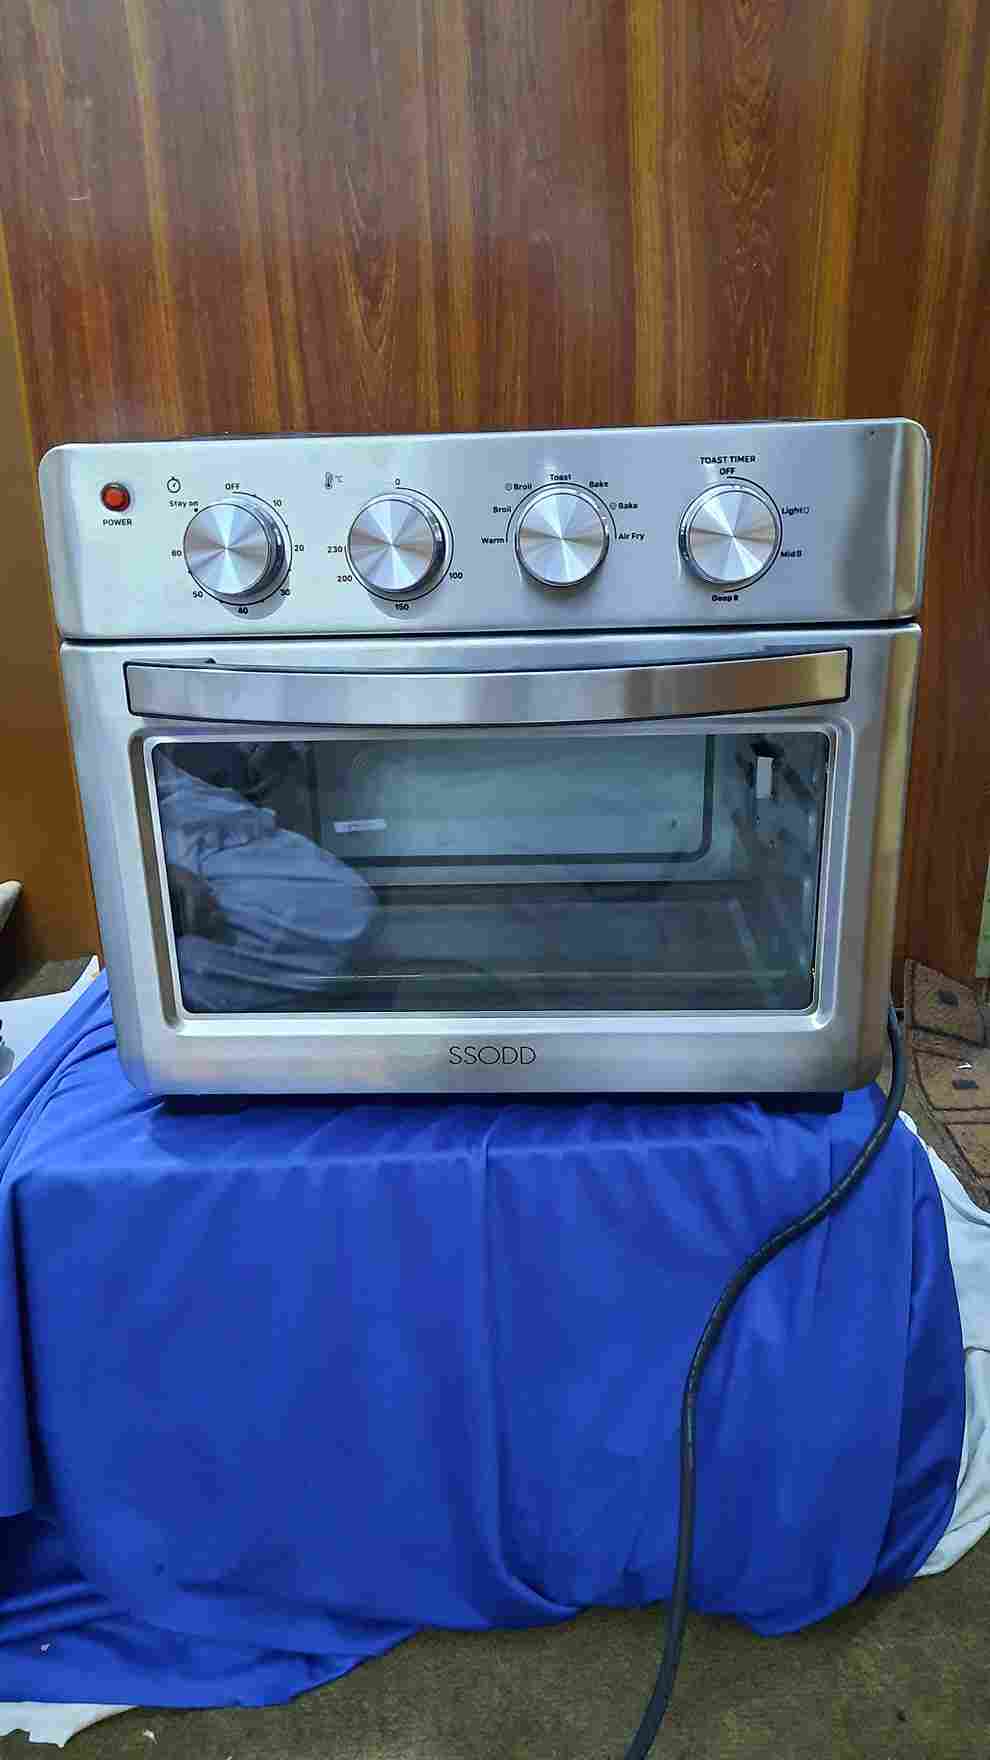 Uk 25 L Multifunction Oven/Air Fryer